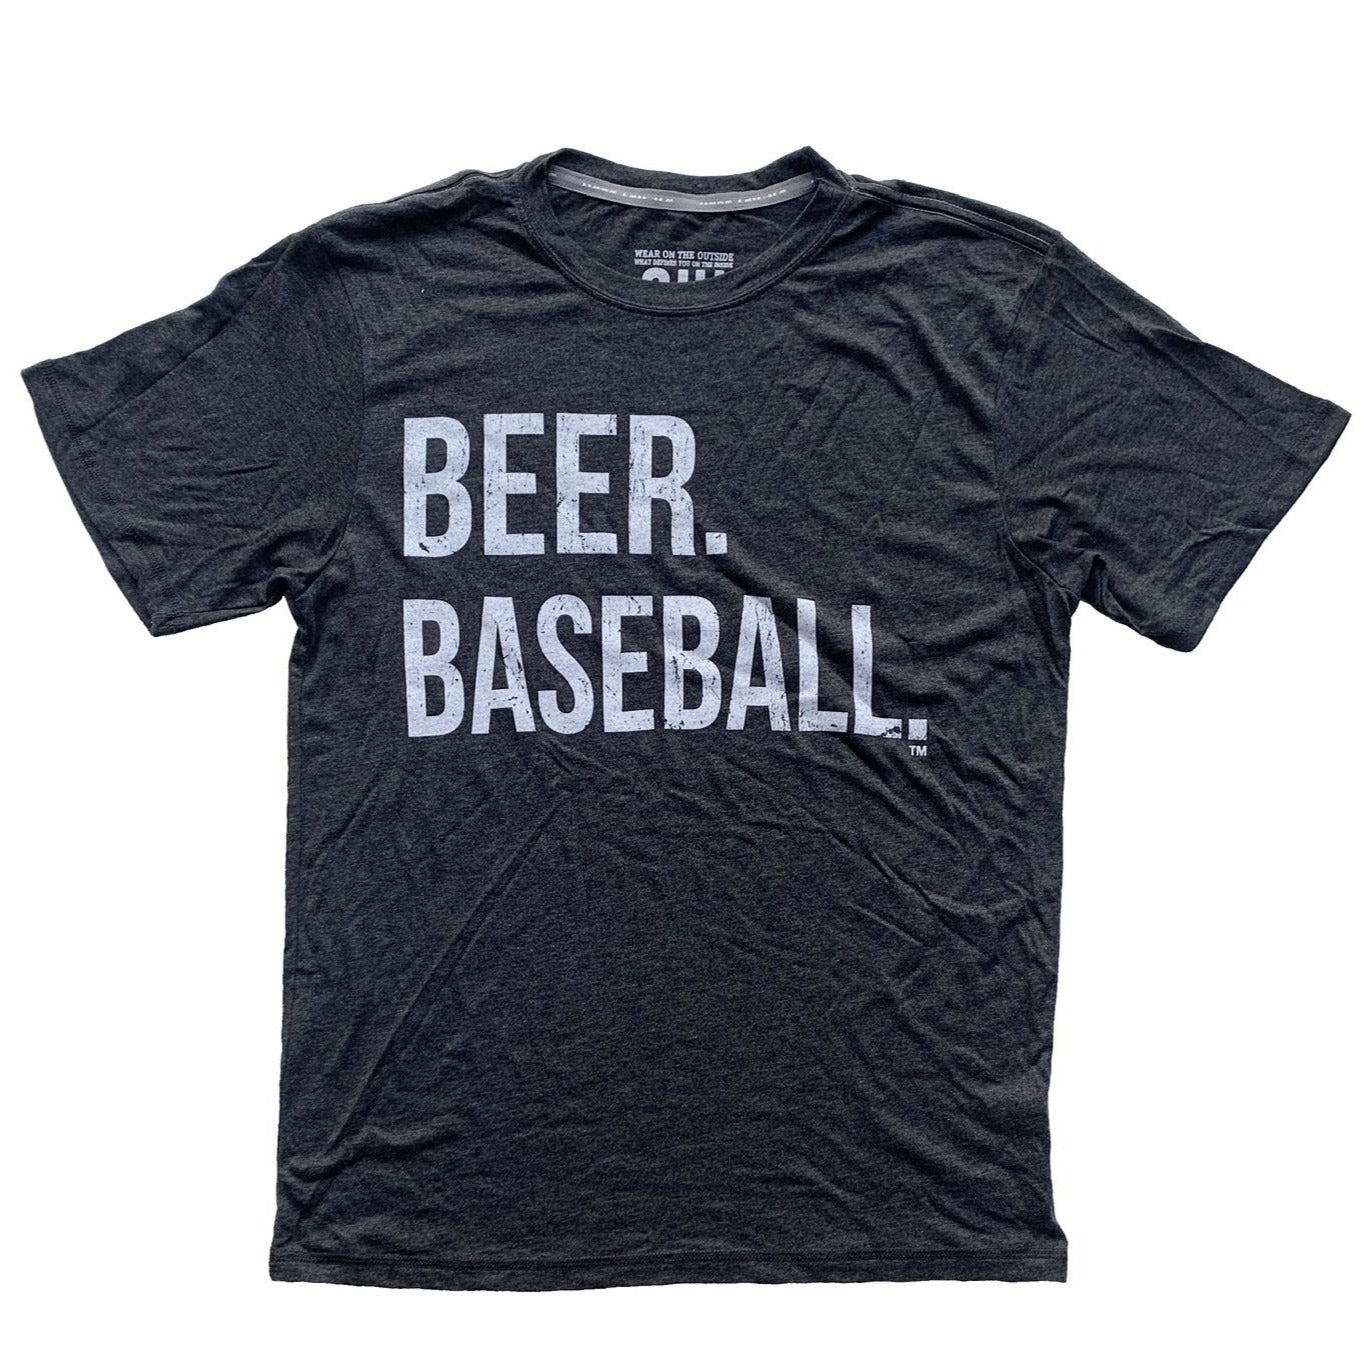 Beer. Baseball. Jetwash Tri-blend Tee